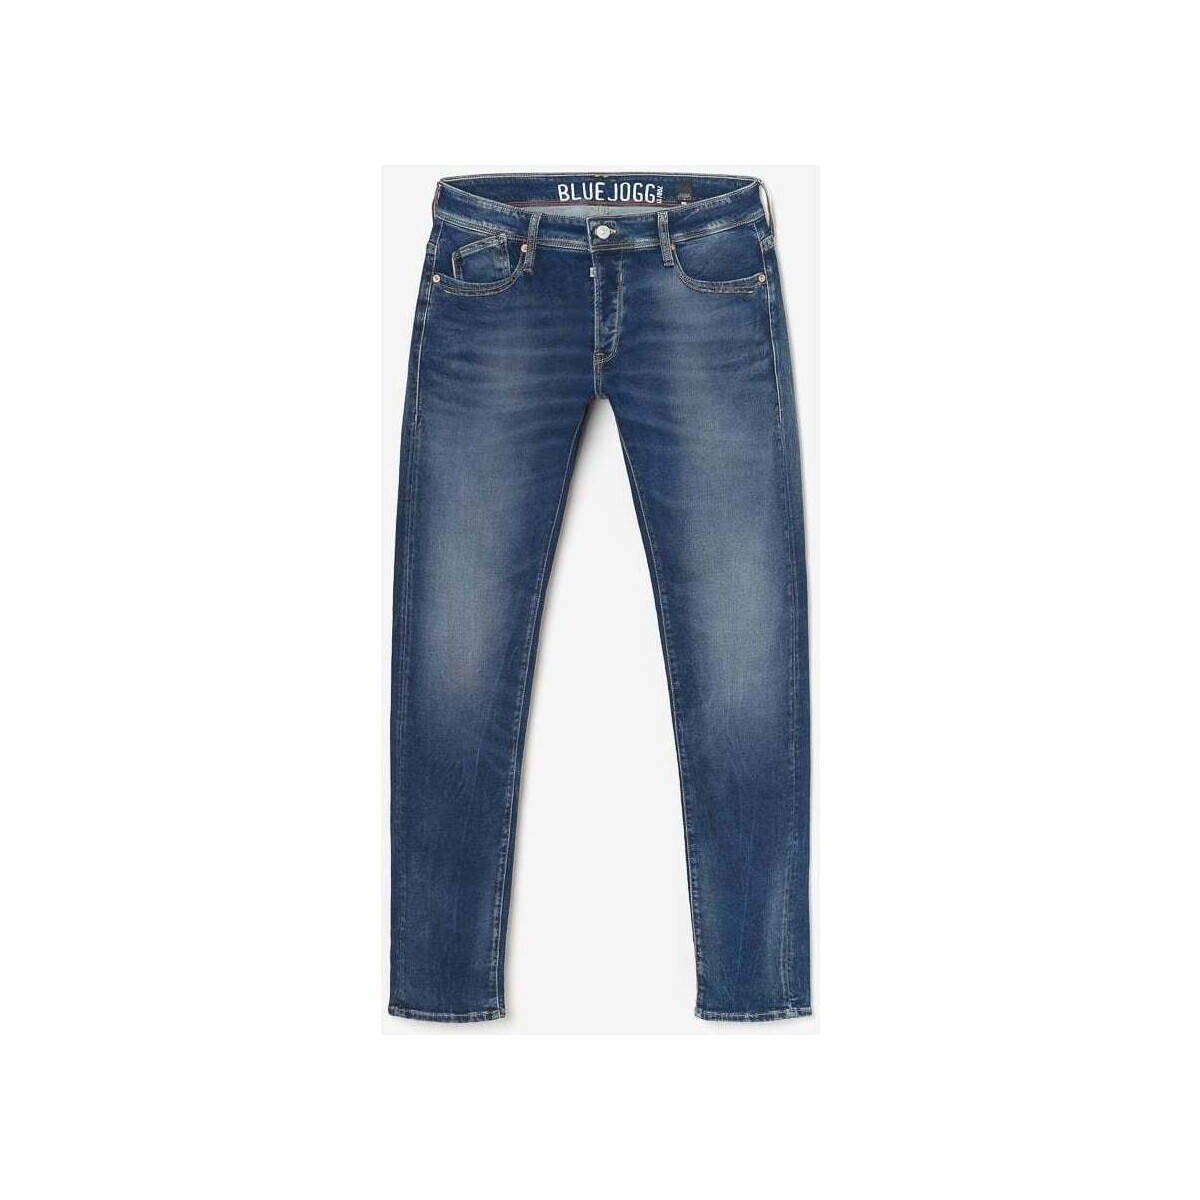 Le Temps des Cerises Bleu Jogg 700/11 adjusted jeans bleu vyugNlvK